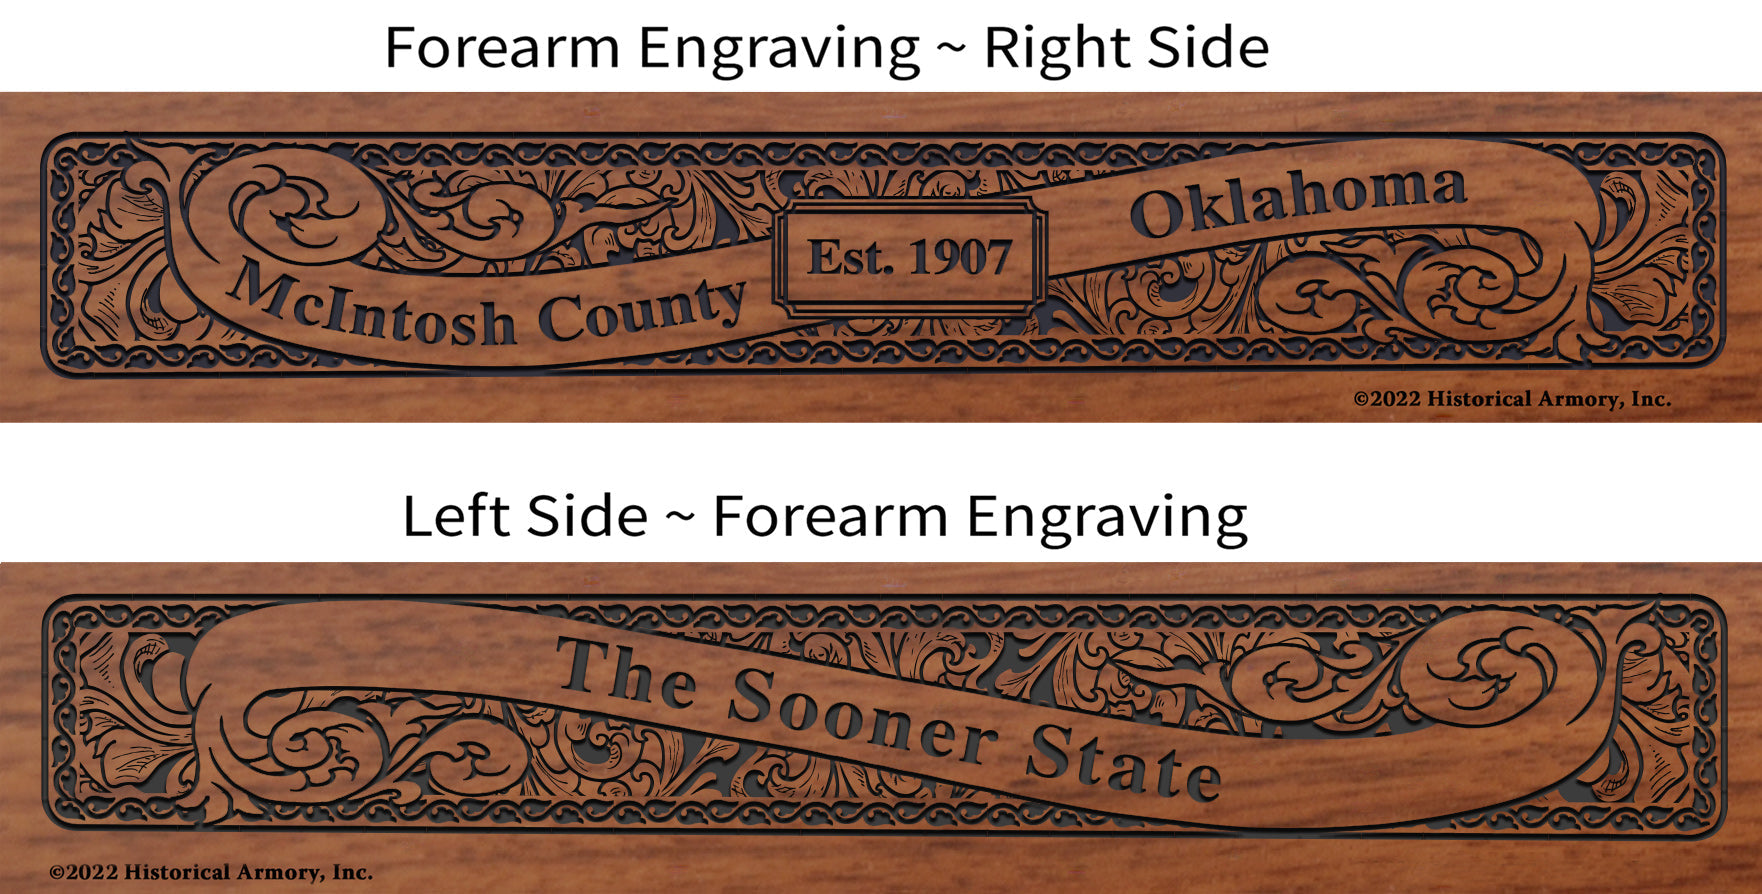 McIntosh County Oklahoma Engraved Rifle Forearm